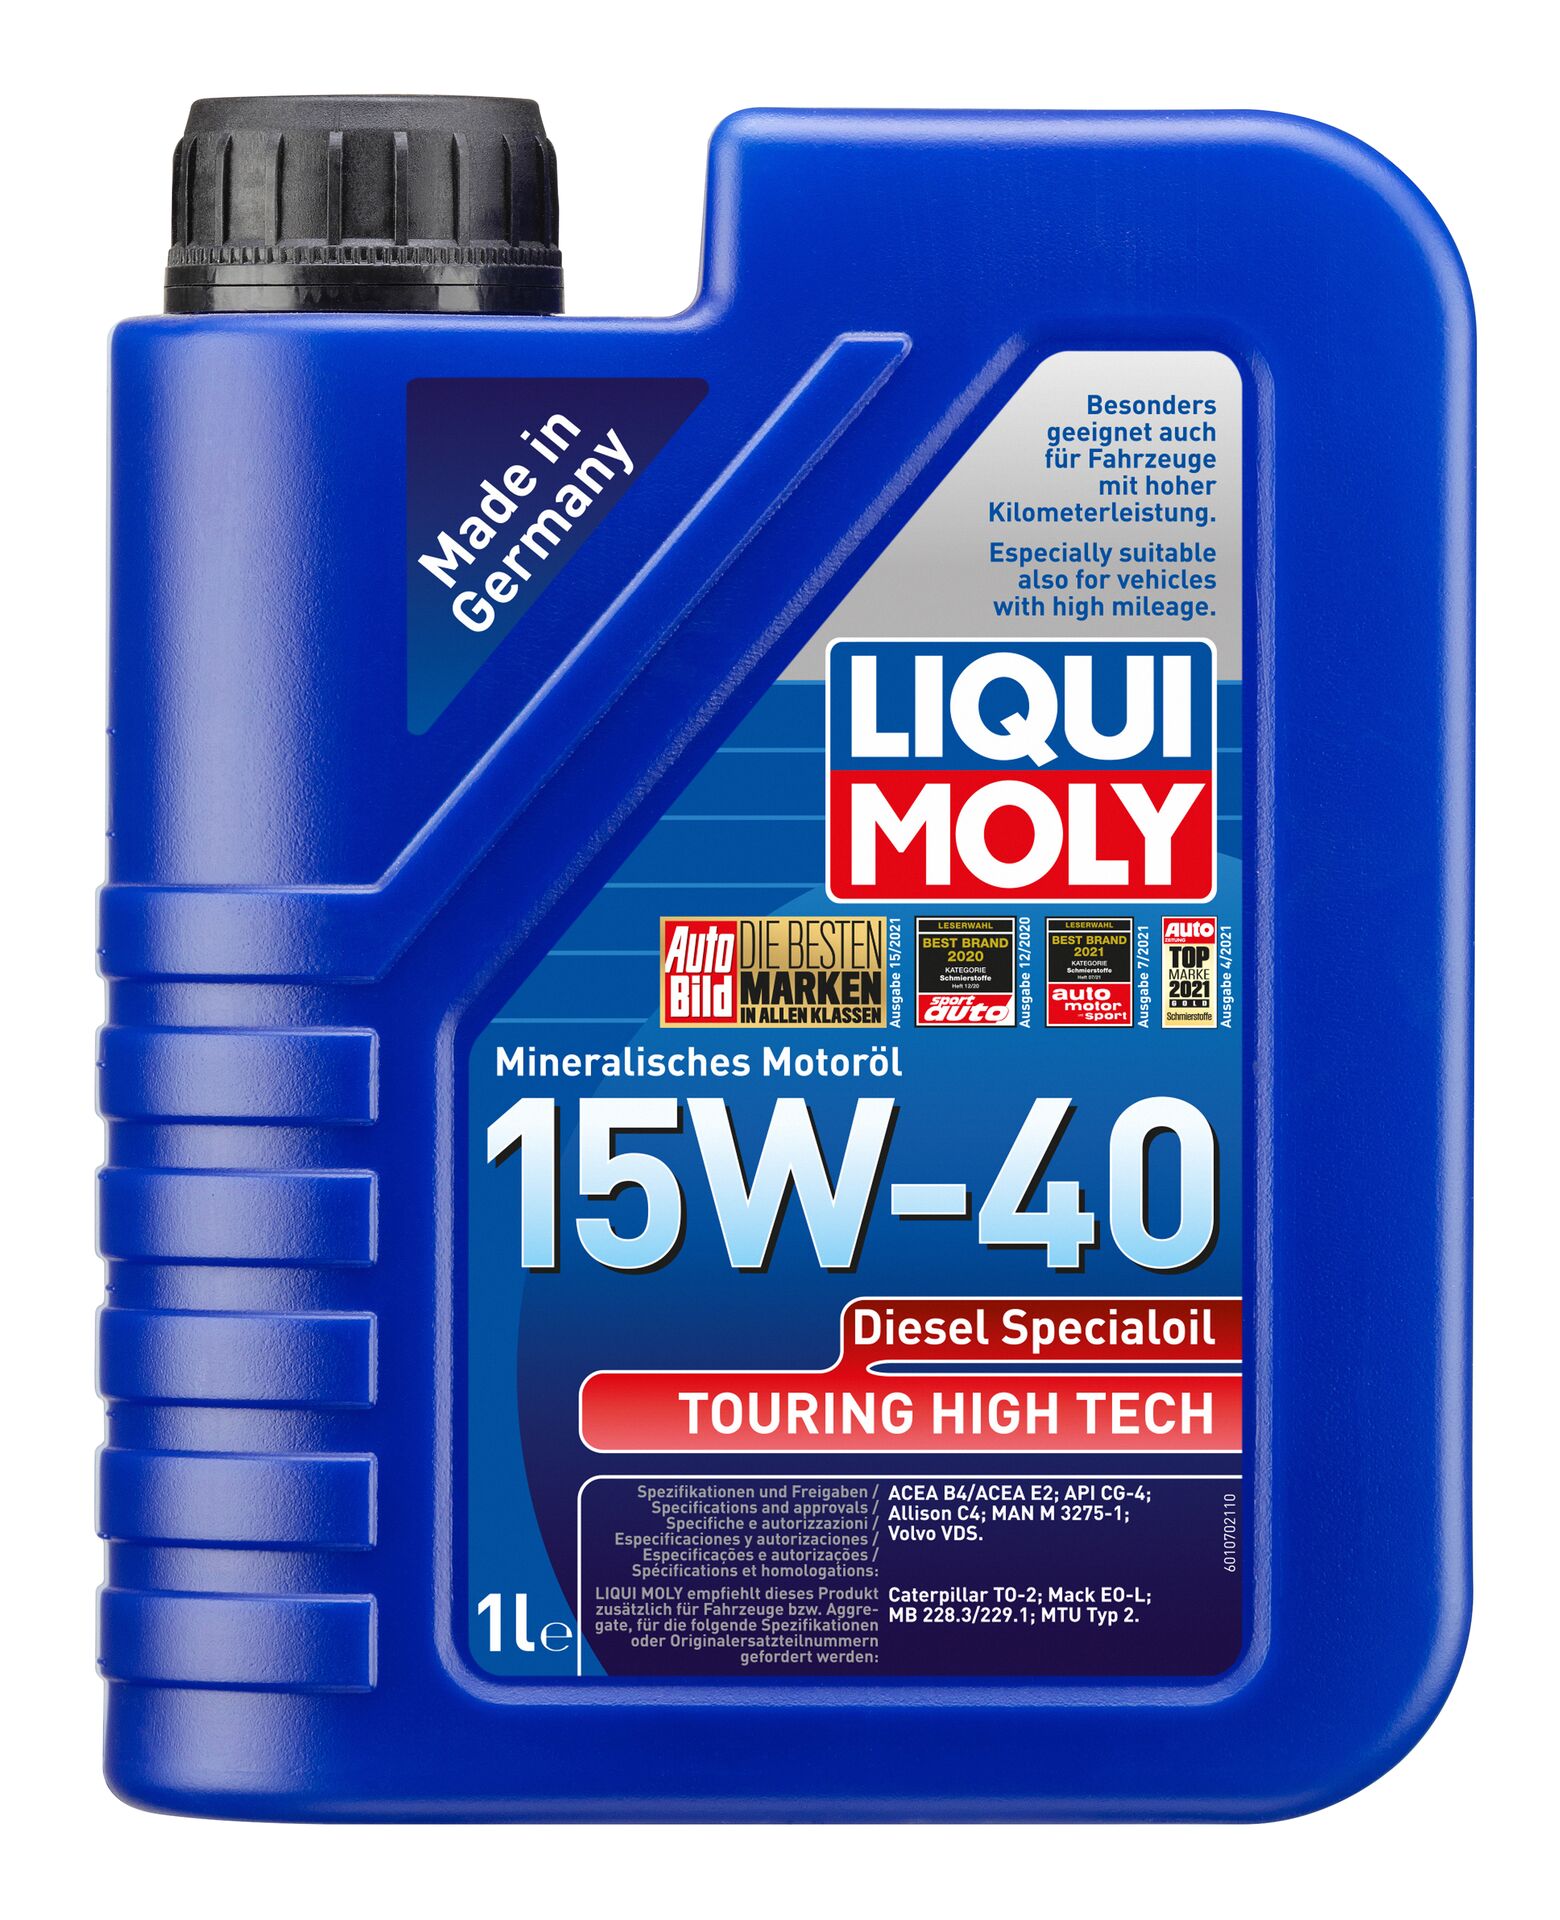 Liqui Moly Touring High Tech Diesel-Spezialöl 15W-40 Motoröl Oil 1L